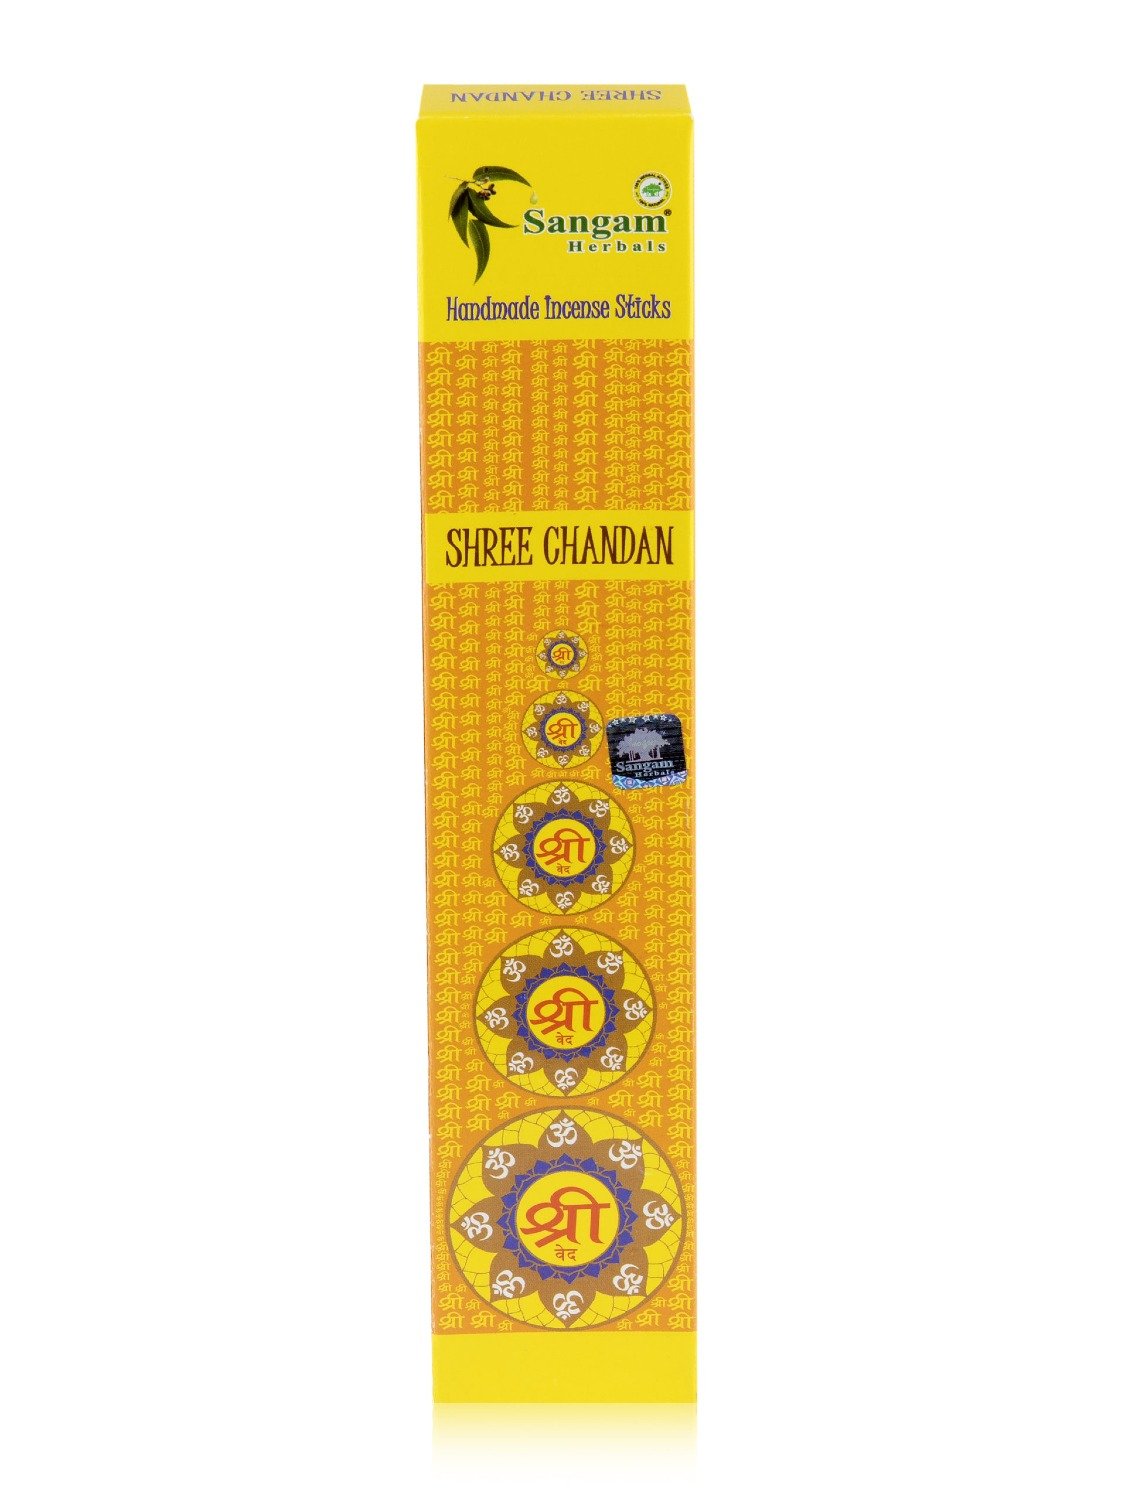 Благовоние Shree Chandan, 15 палочек по 21 см. 